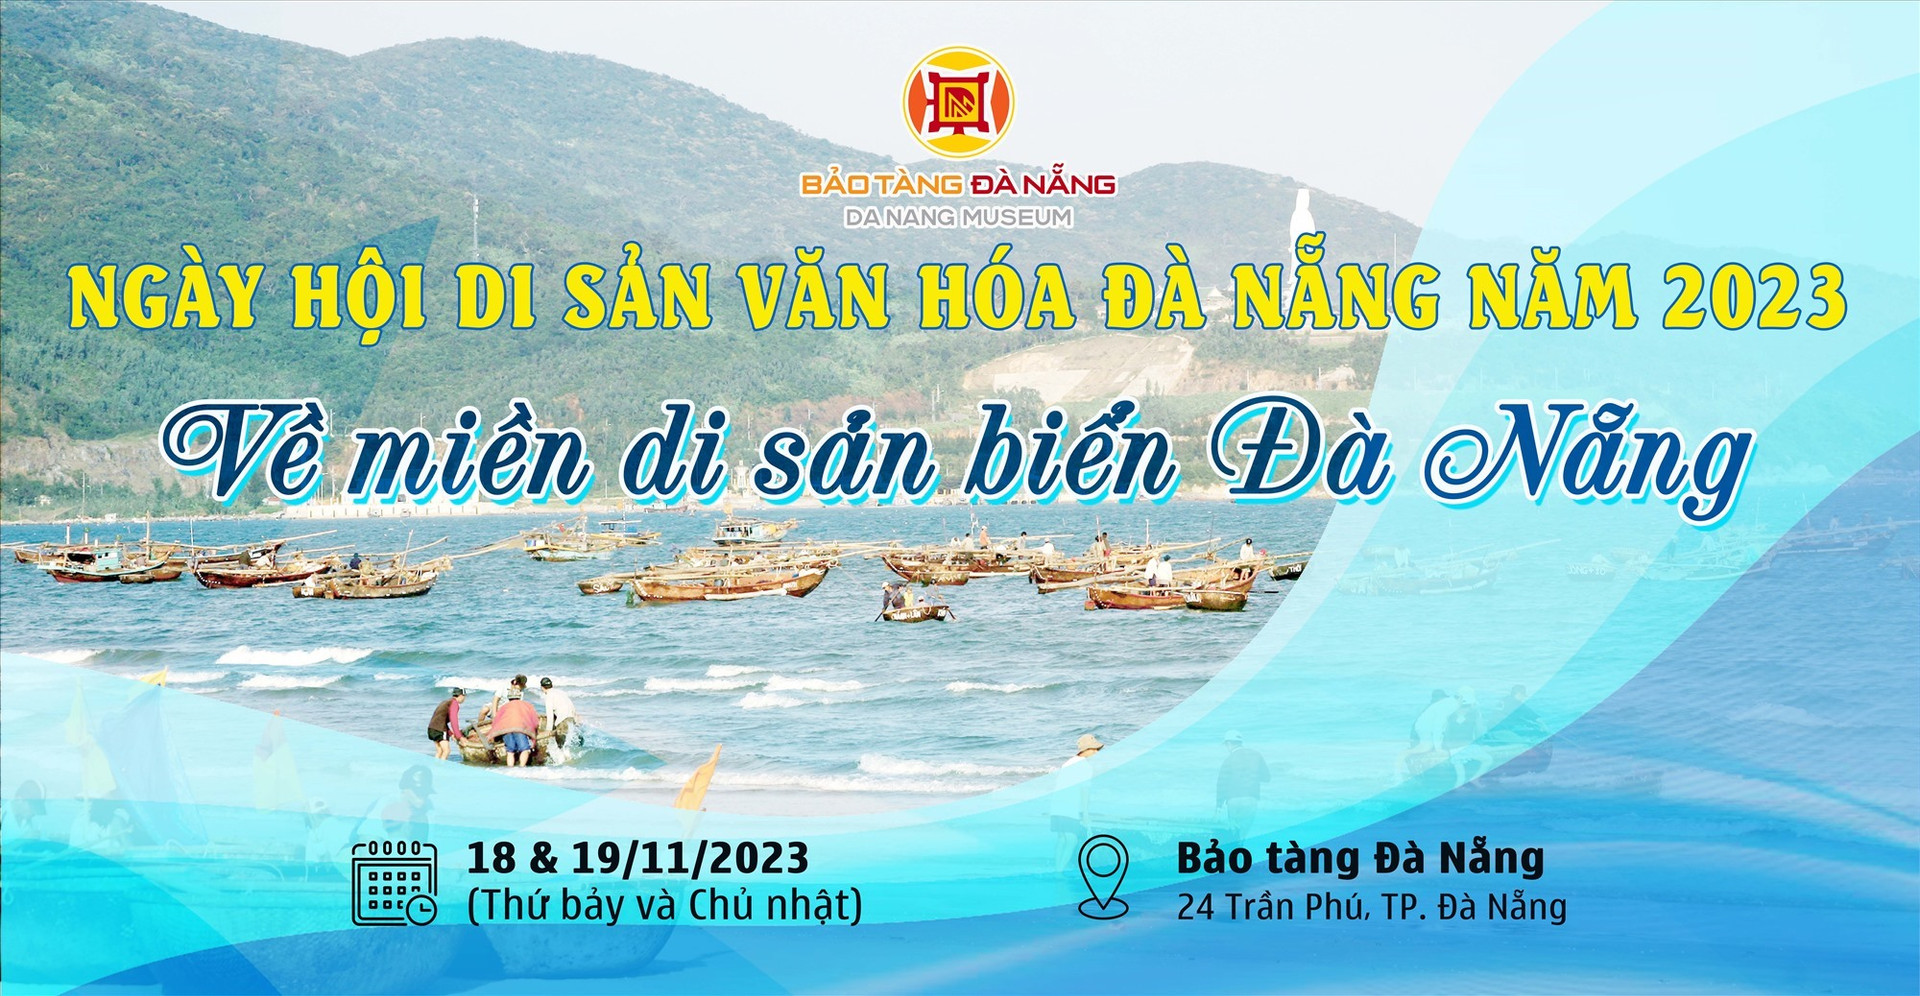 The Da Nang Cultural Heritage Festival lasting for two days, on November 18 & 19.